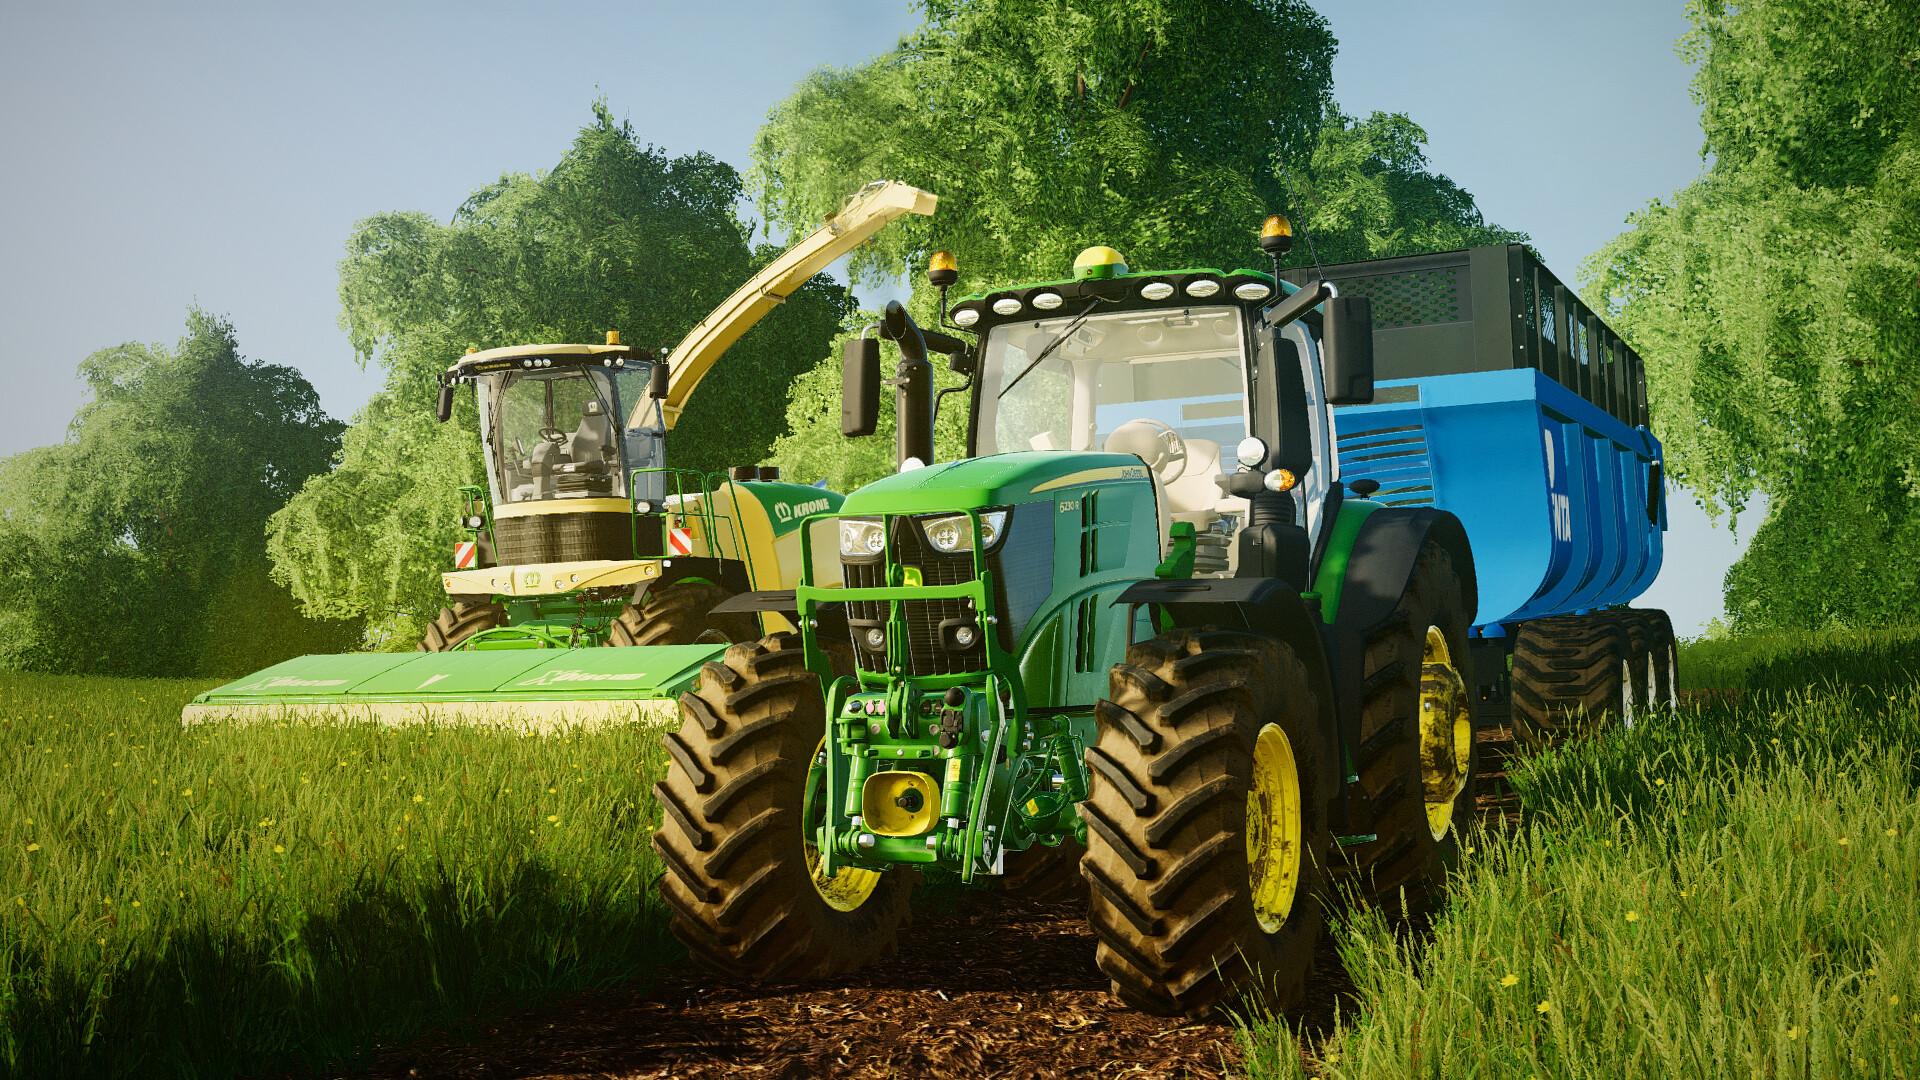 Farming simulator gold. Farming Simulator 20. Farming Simulator 19 logo. Farming Simulator 19 PNG logo. Farming Simulator 20 logo.